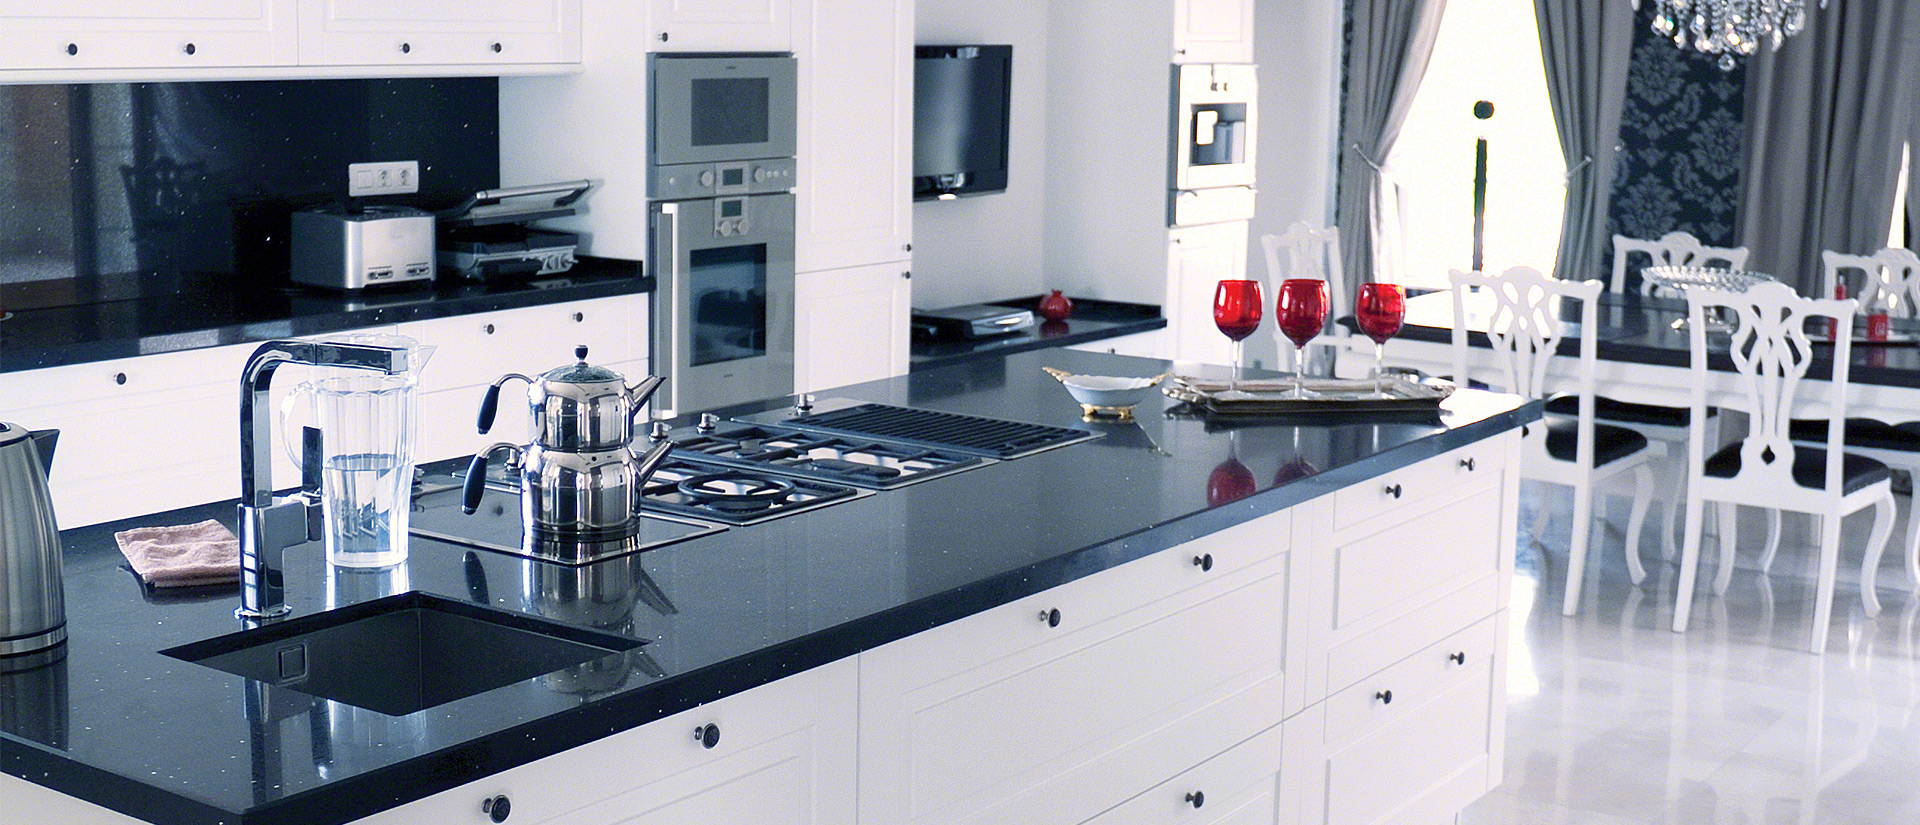 Clean black and white kitchen with Sparkling black quartz stone